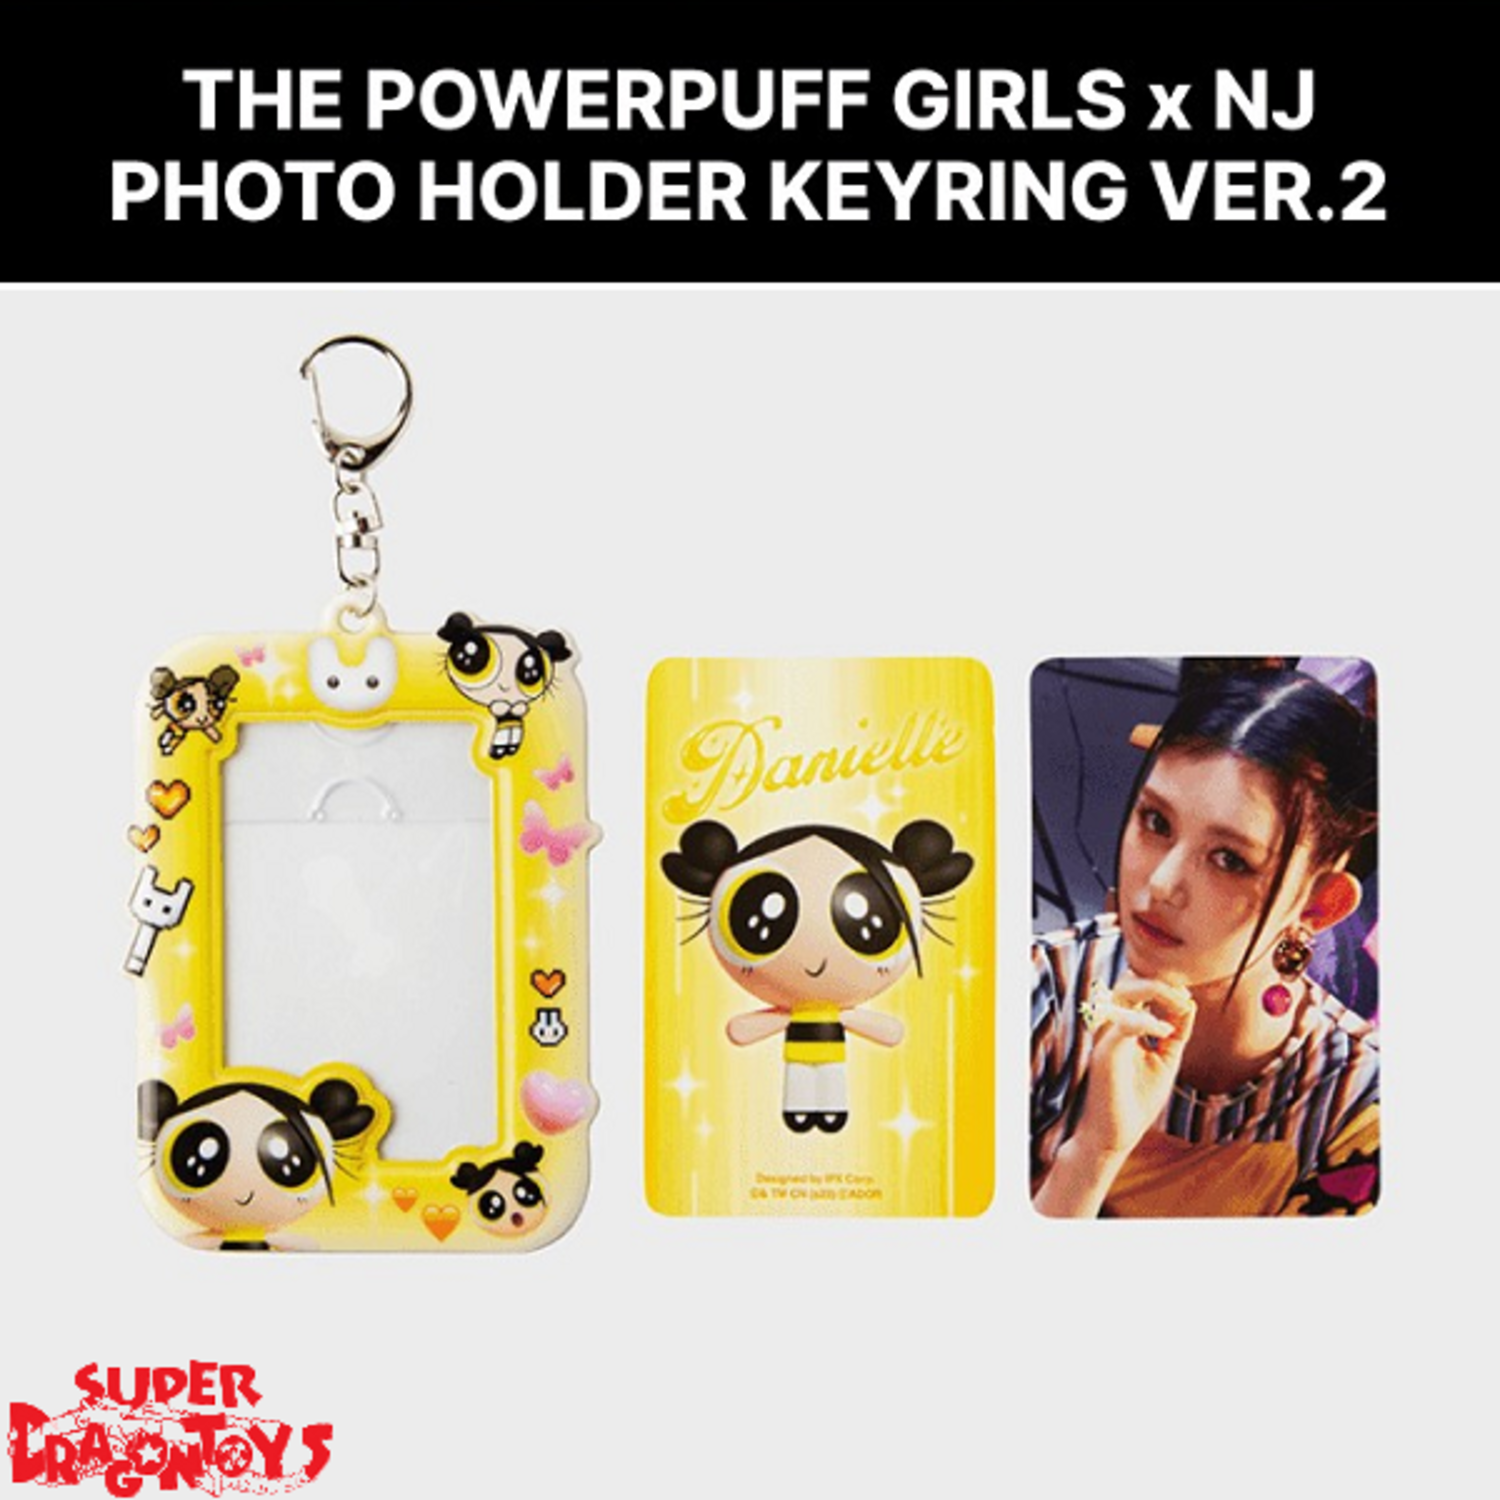 Powerpuff Girls TV Series Art Images Lanyard with Cast Badge